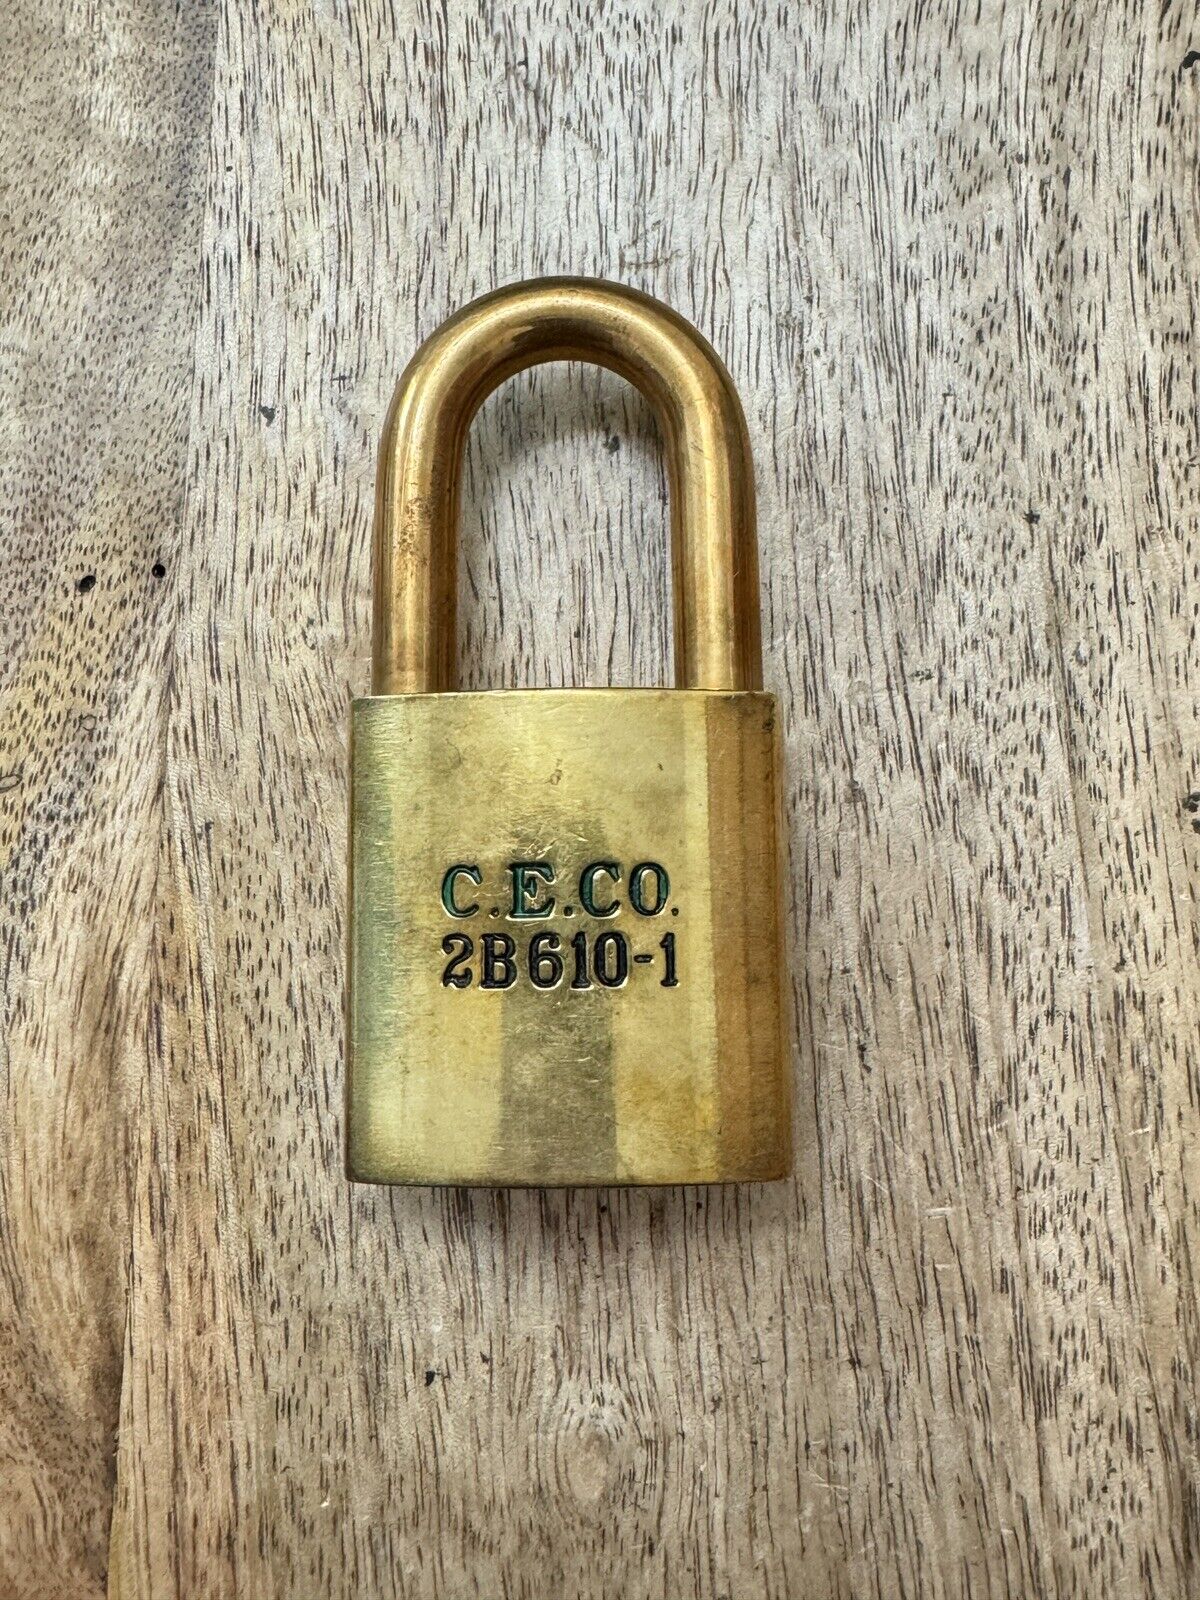 Vintage C. E. Co. Best Padlock No Key Lock